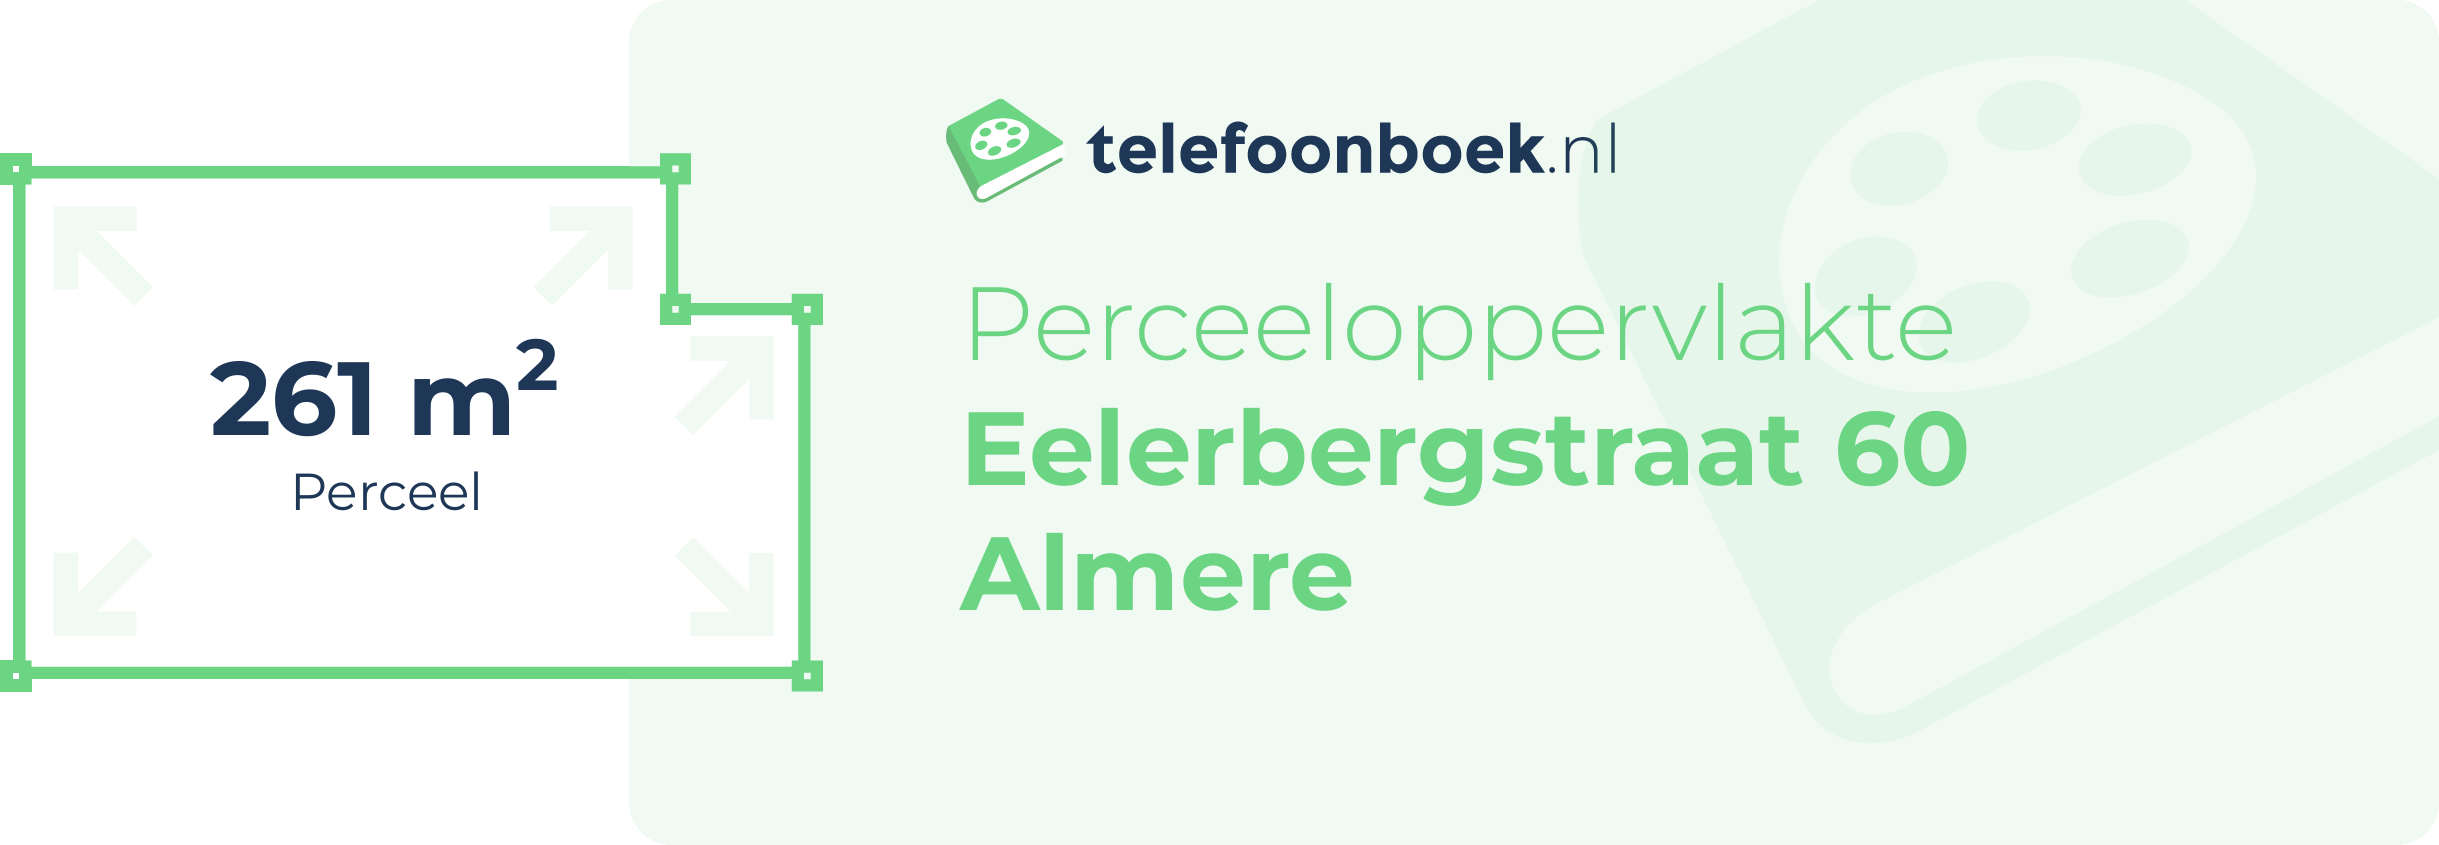 Perceeloppervlakte Eelerbergstraat 60 Almere